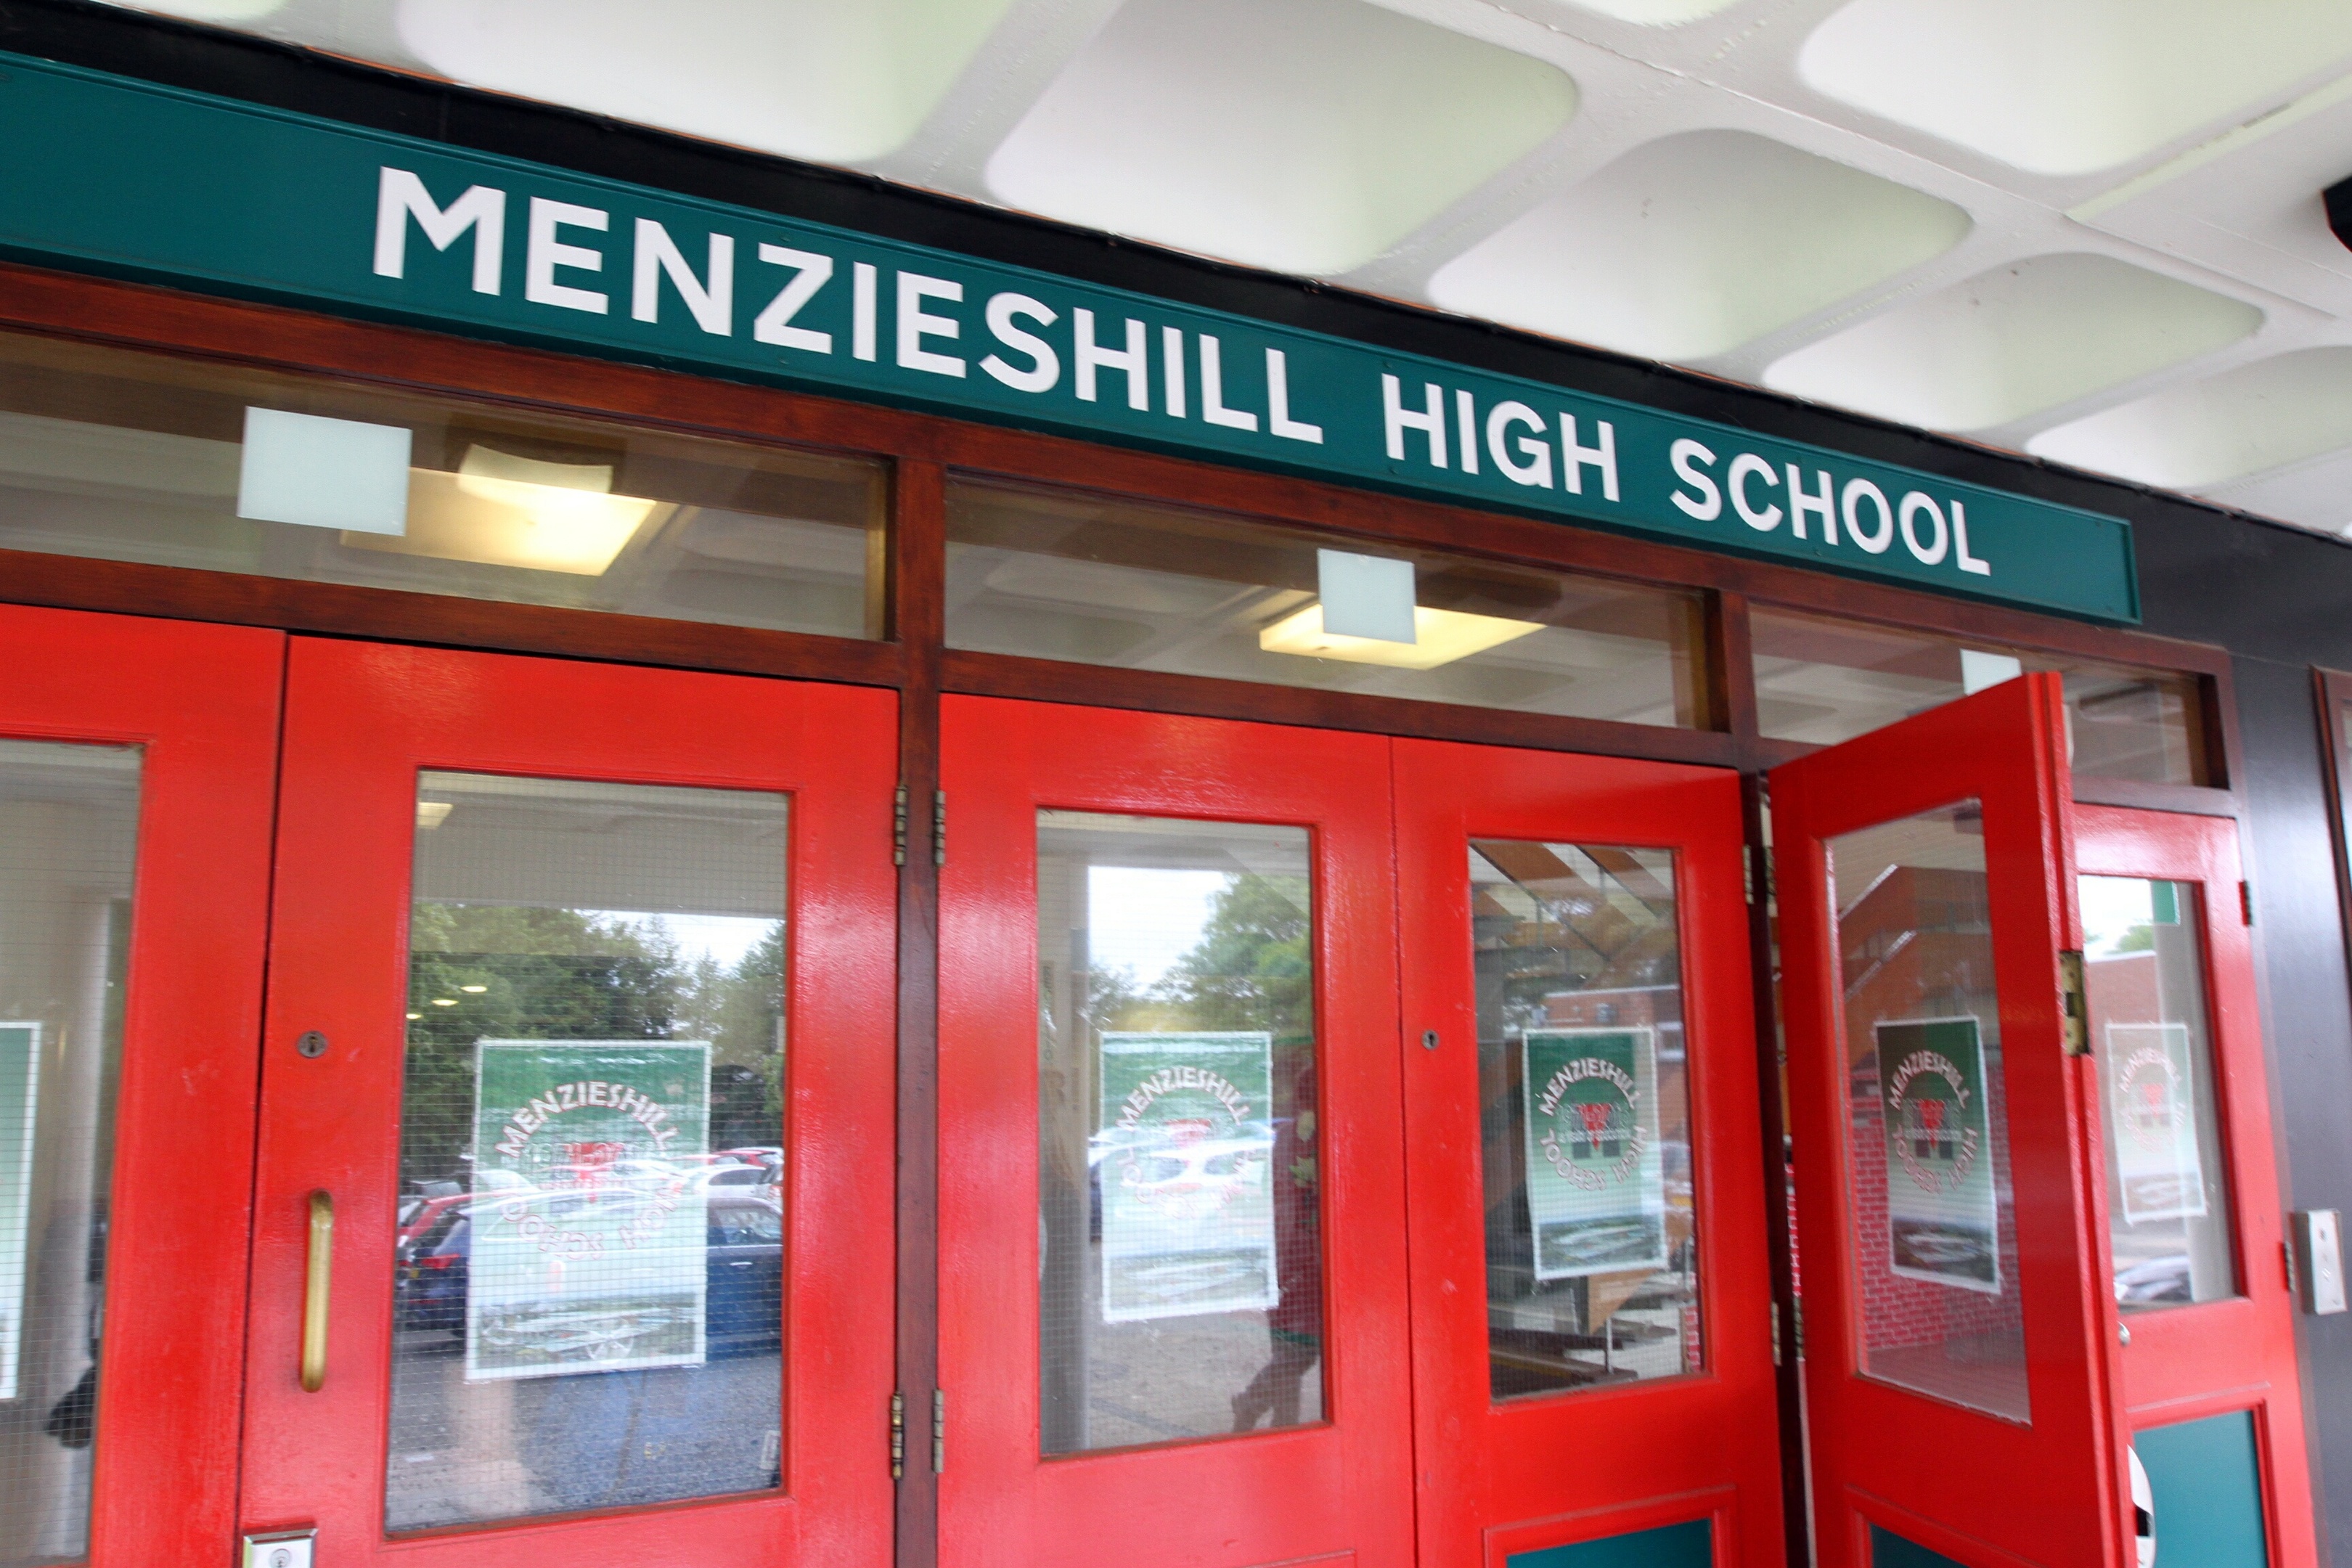 Menzieshill High School.